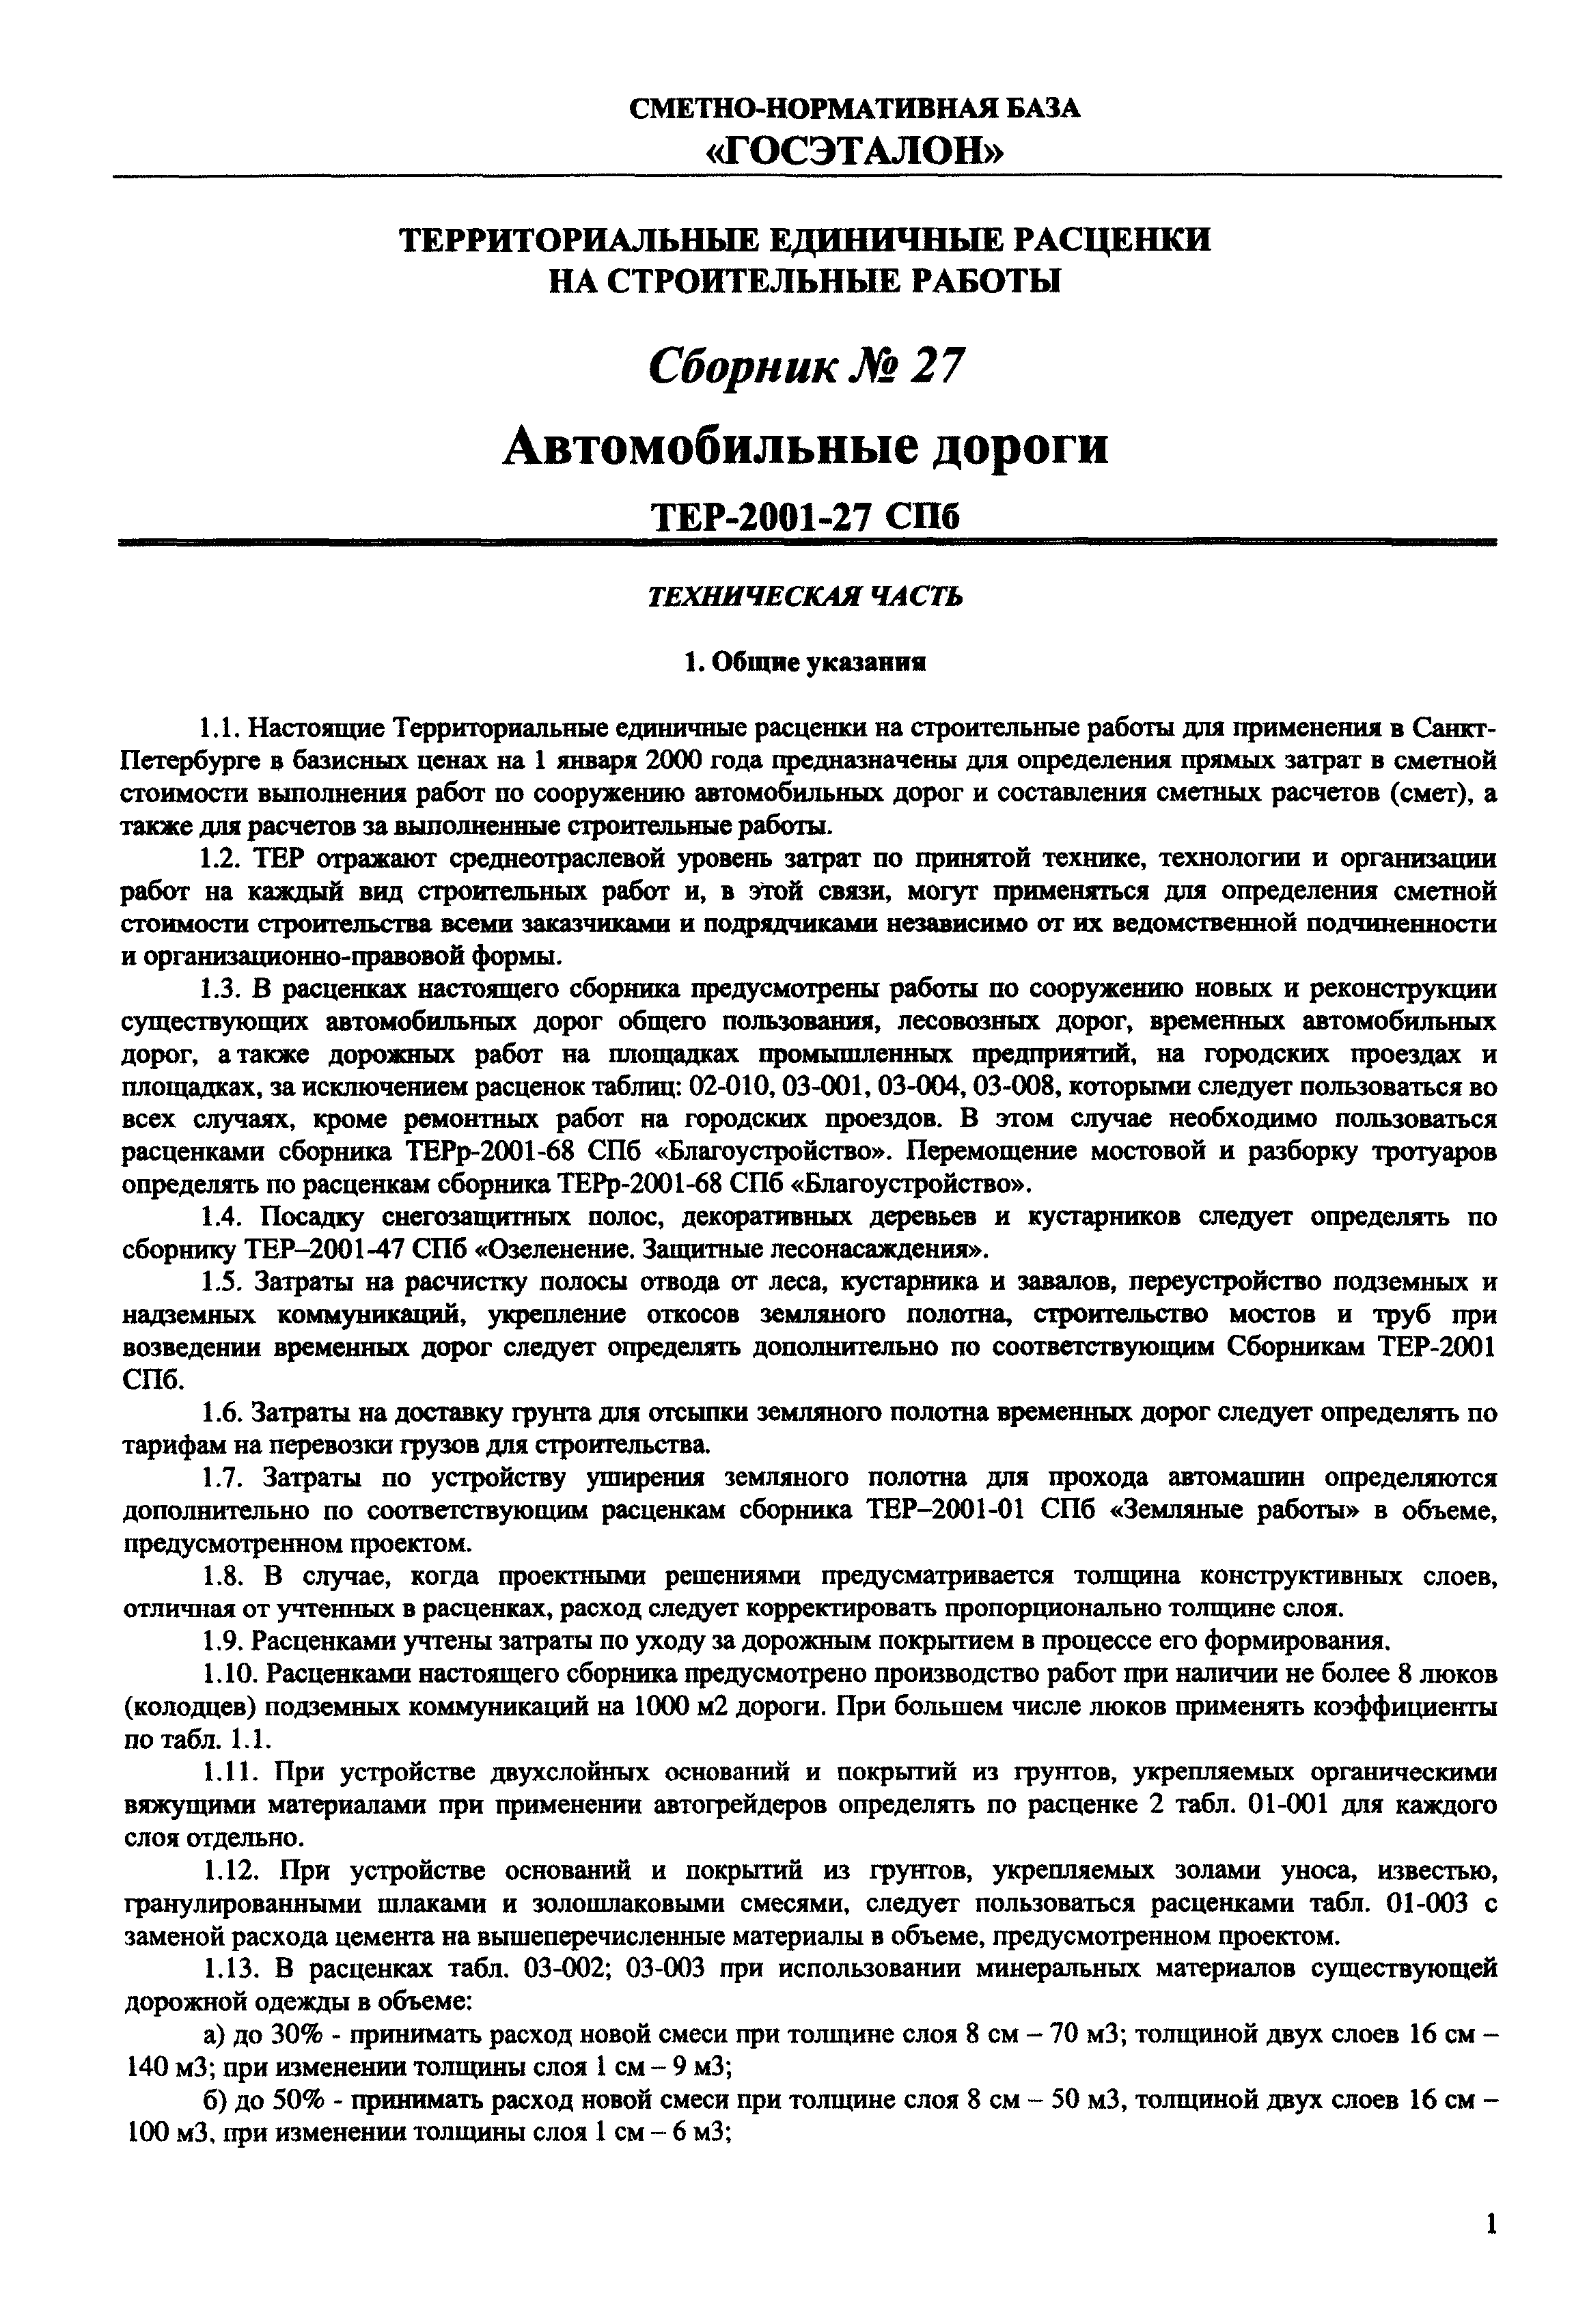 ТЕР 2001-27 СПб